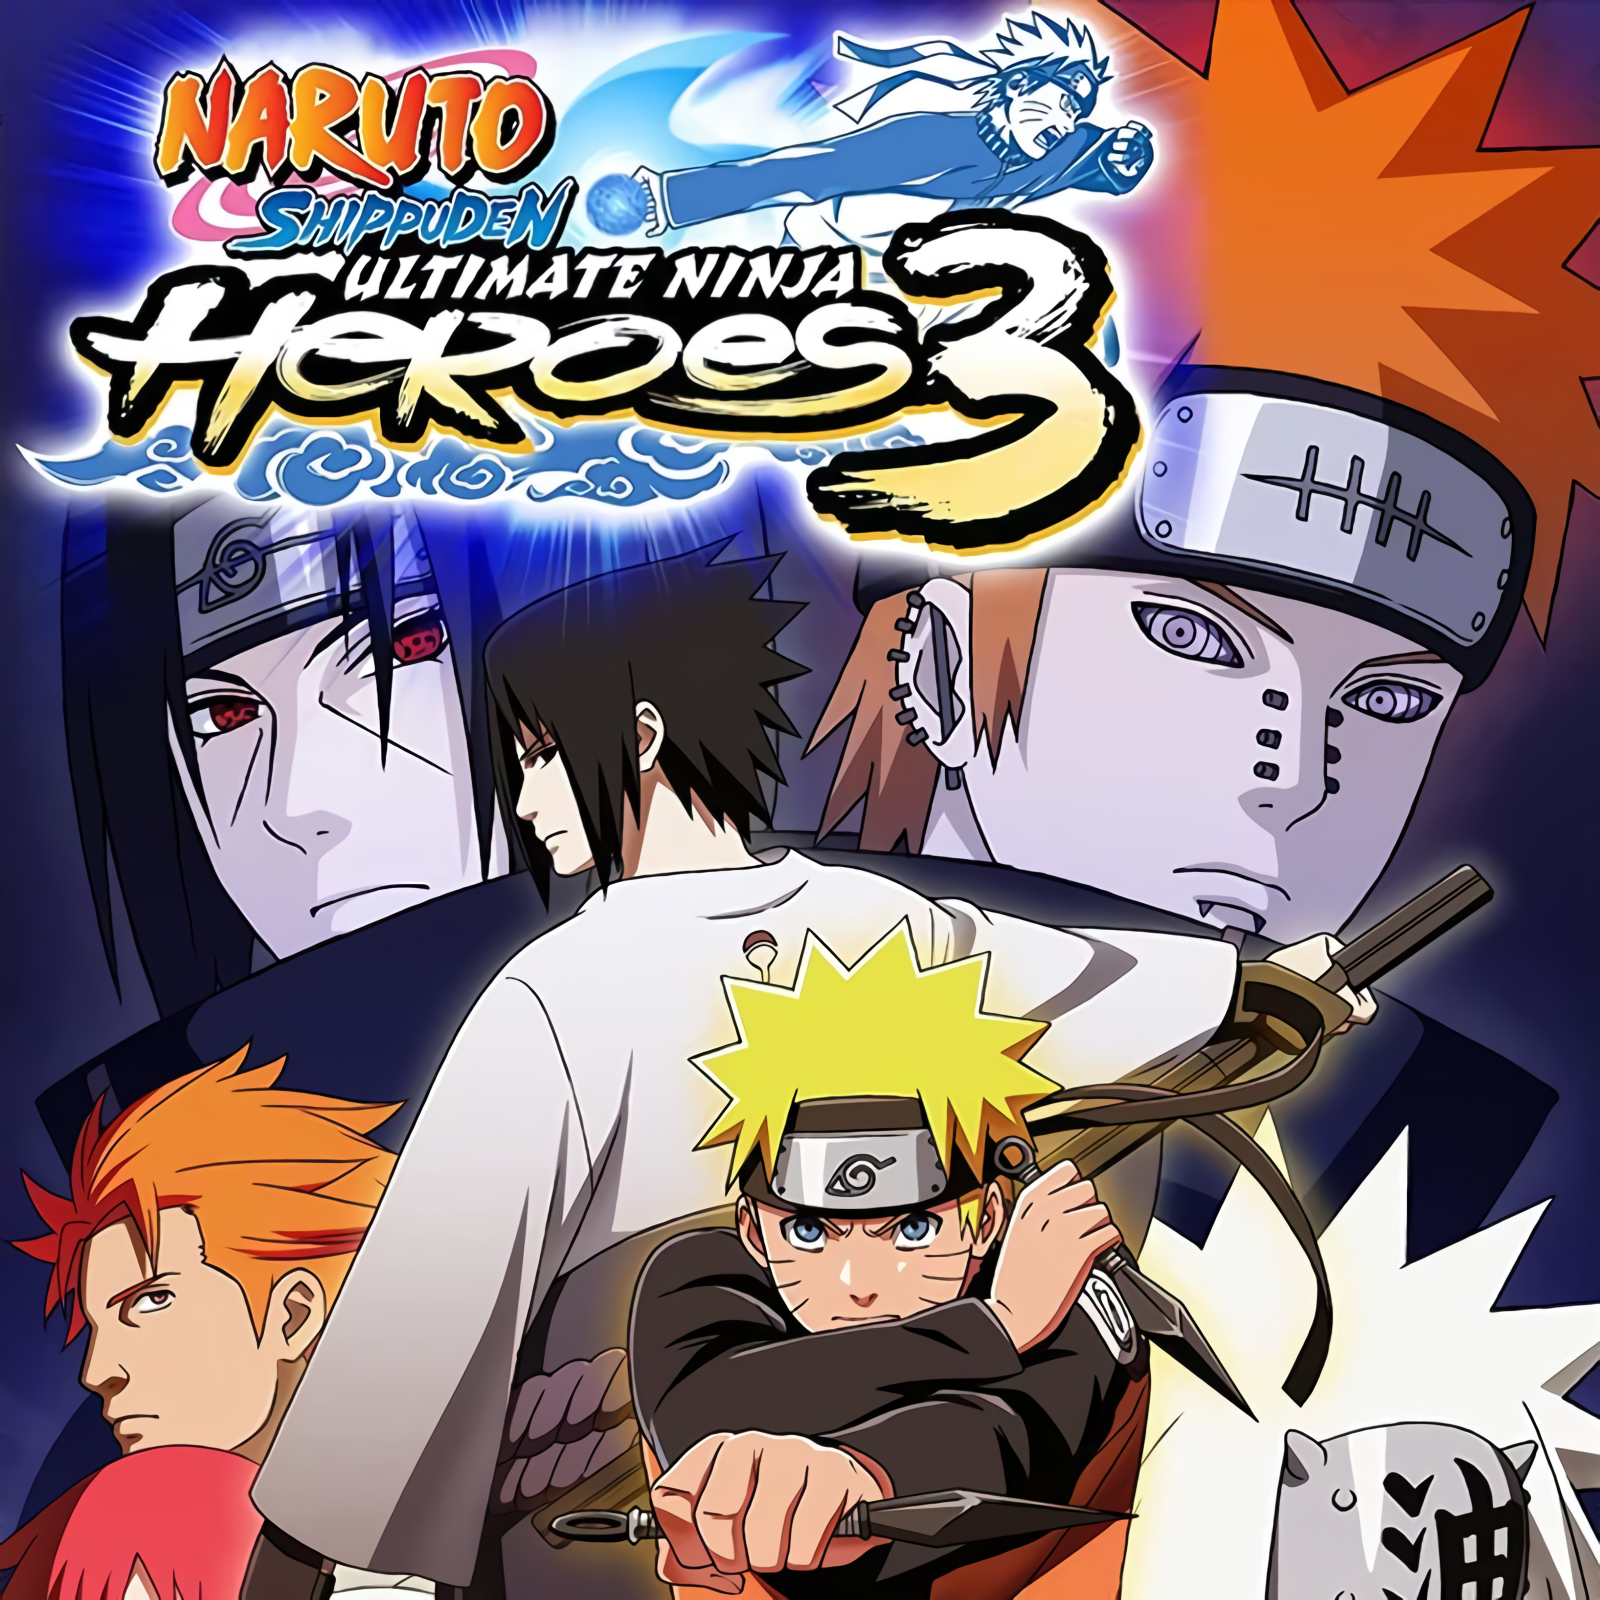 Naruto Shippuden: Ultimate Ninja 4 (Re-Engineered Soundtrack) (2007) MP3 - Download  Naruto Shippuden: Ultimate Ninja 4 (Re-Engineered Soundtrack) (2007)  Soundtracks for FREE!